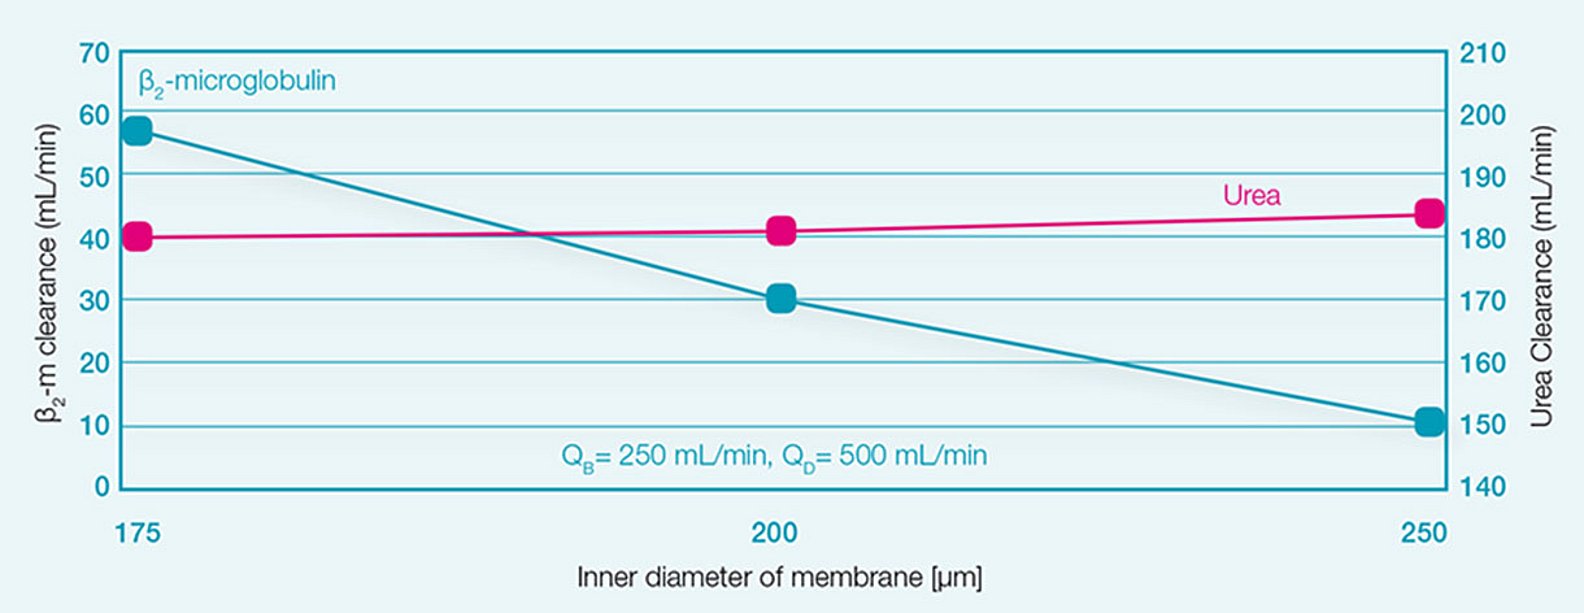 Clearance versus the inner diameter of the fibre